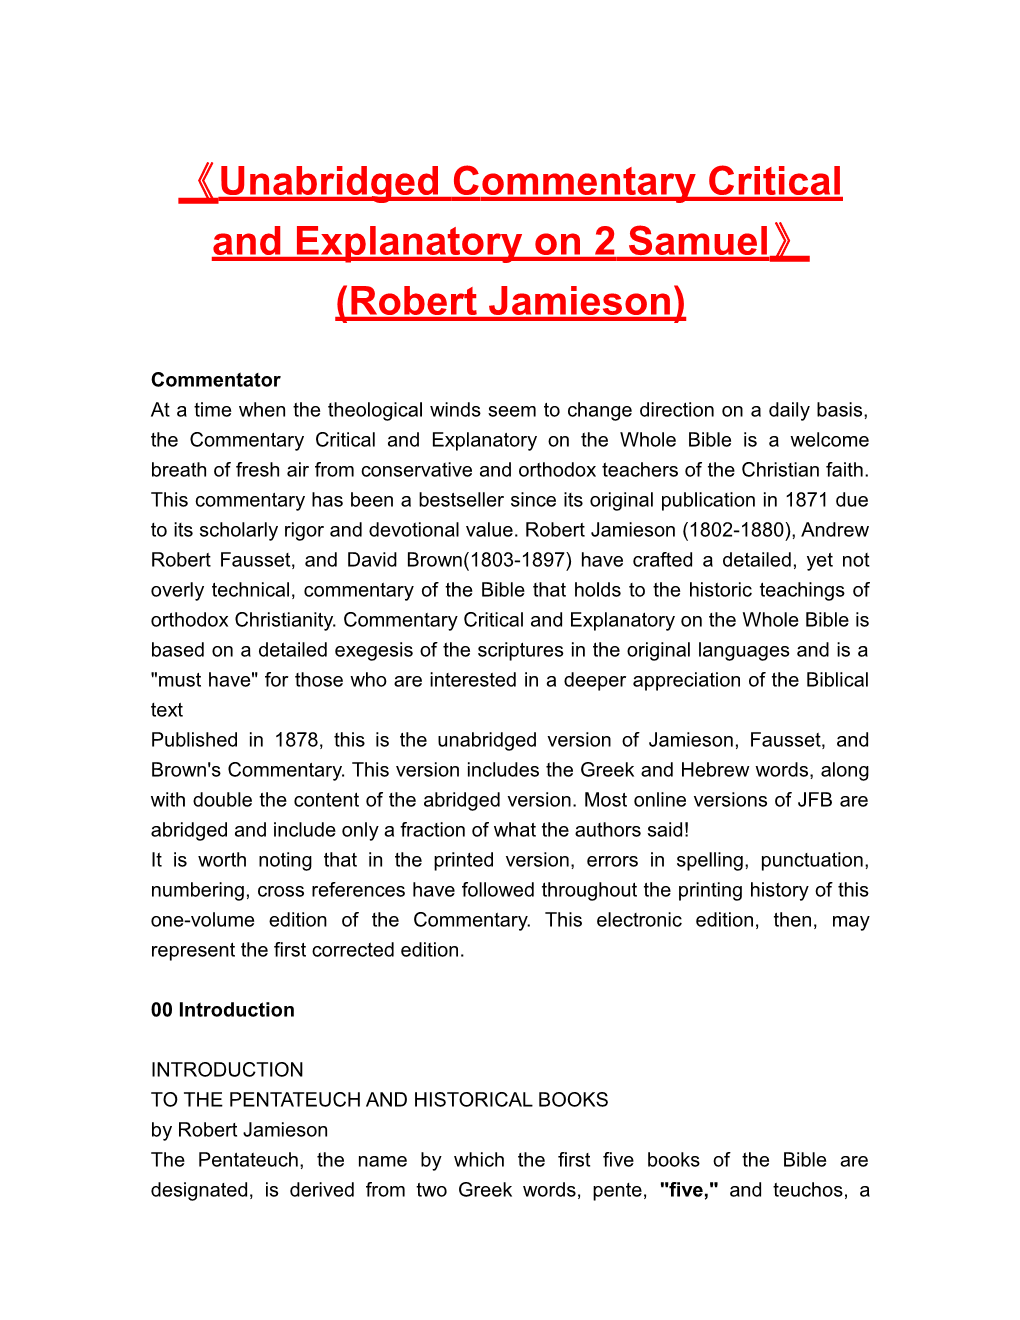 Unabridged Commentarycritical and Explanatory on 2 Samuel (Robert Jamieson)